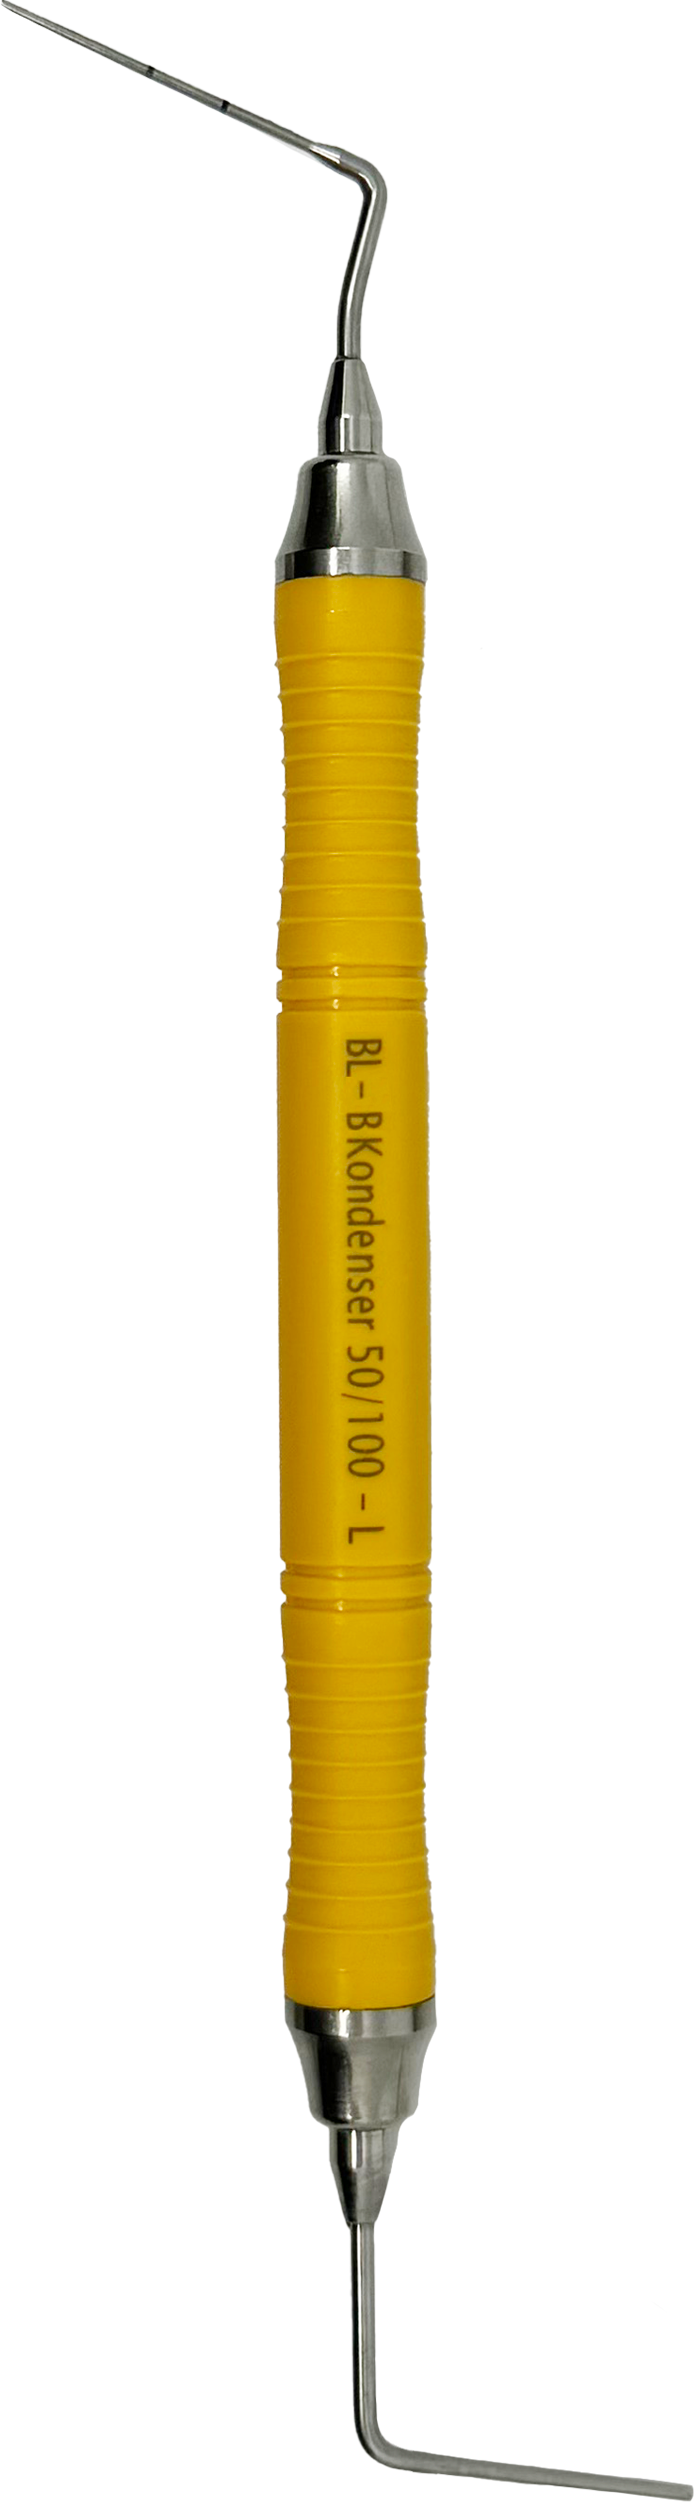 BL-B Kondenser 50/100 Long Type (Retail)